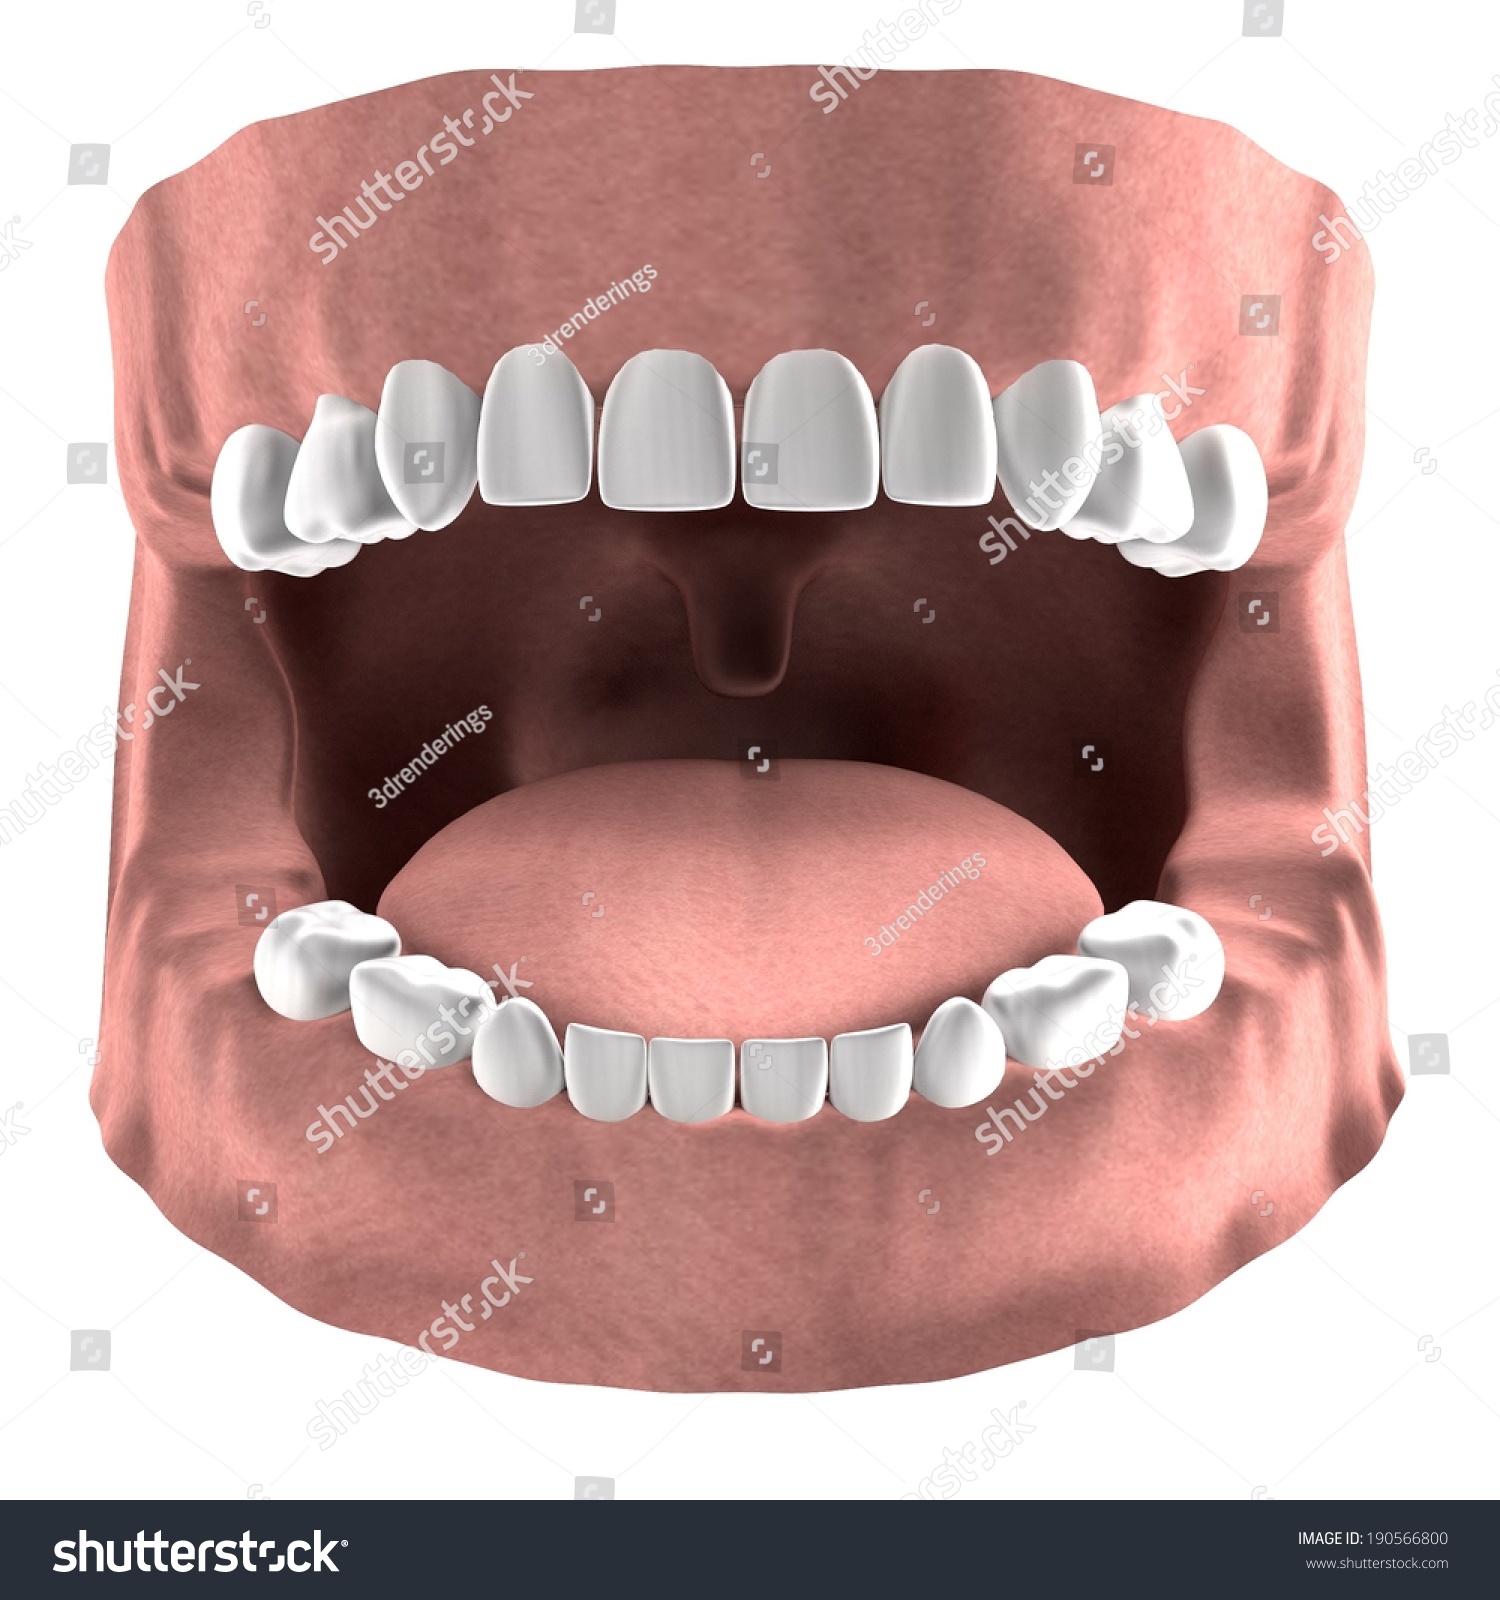 Realistic 3d Render Child Teeth Stock Illustration 190566800 ...